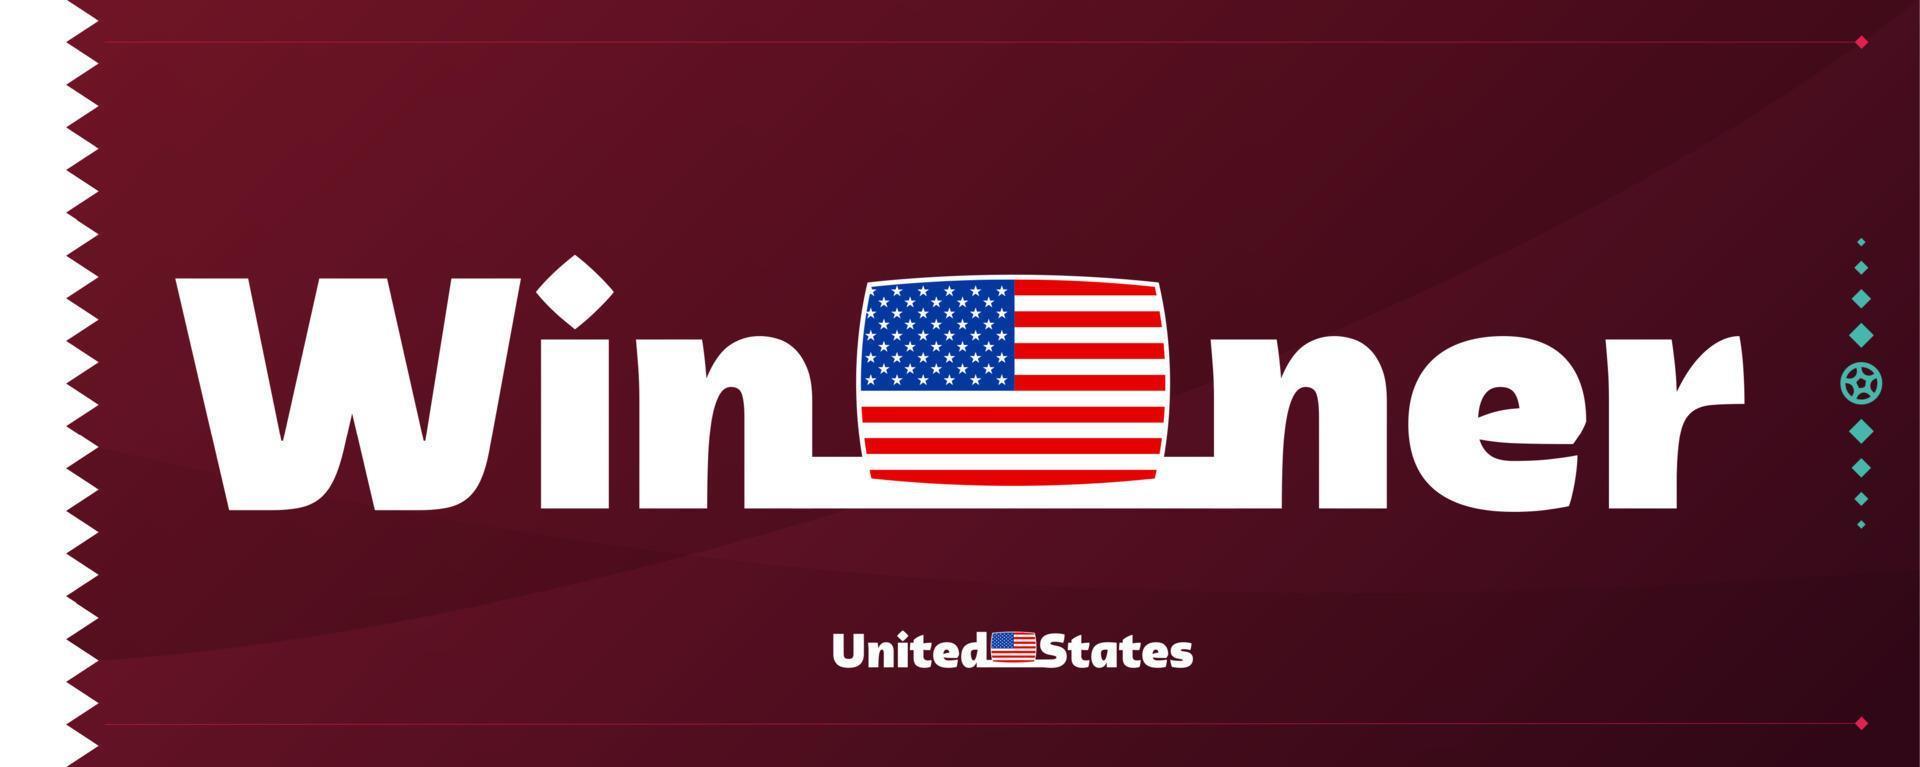 Verenigde Staten van Amerika, Verenigde staten vlag met winnaar leuze Aan Amerikaans voetbal achtergrond. wereld Amerikaans voetbal 2022 toernooi vector illustratie